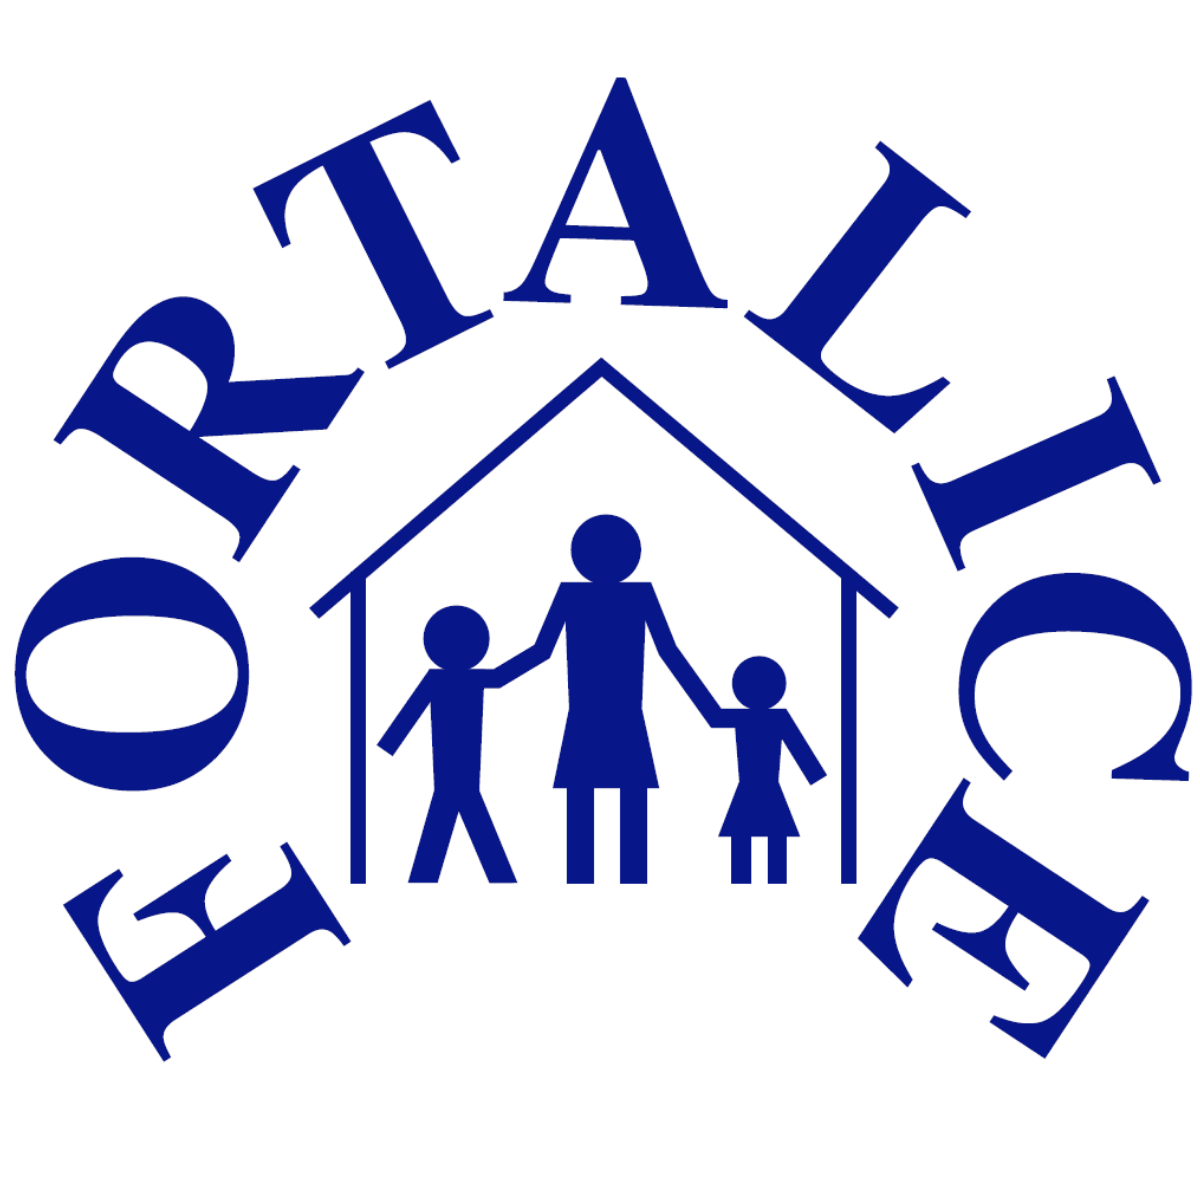 Fortalice charity logo